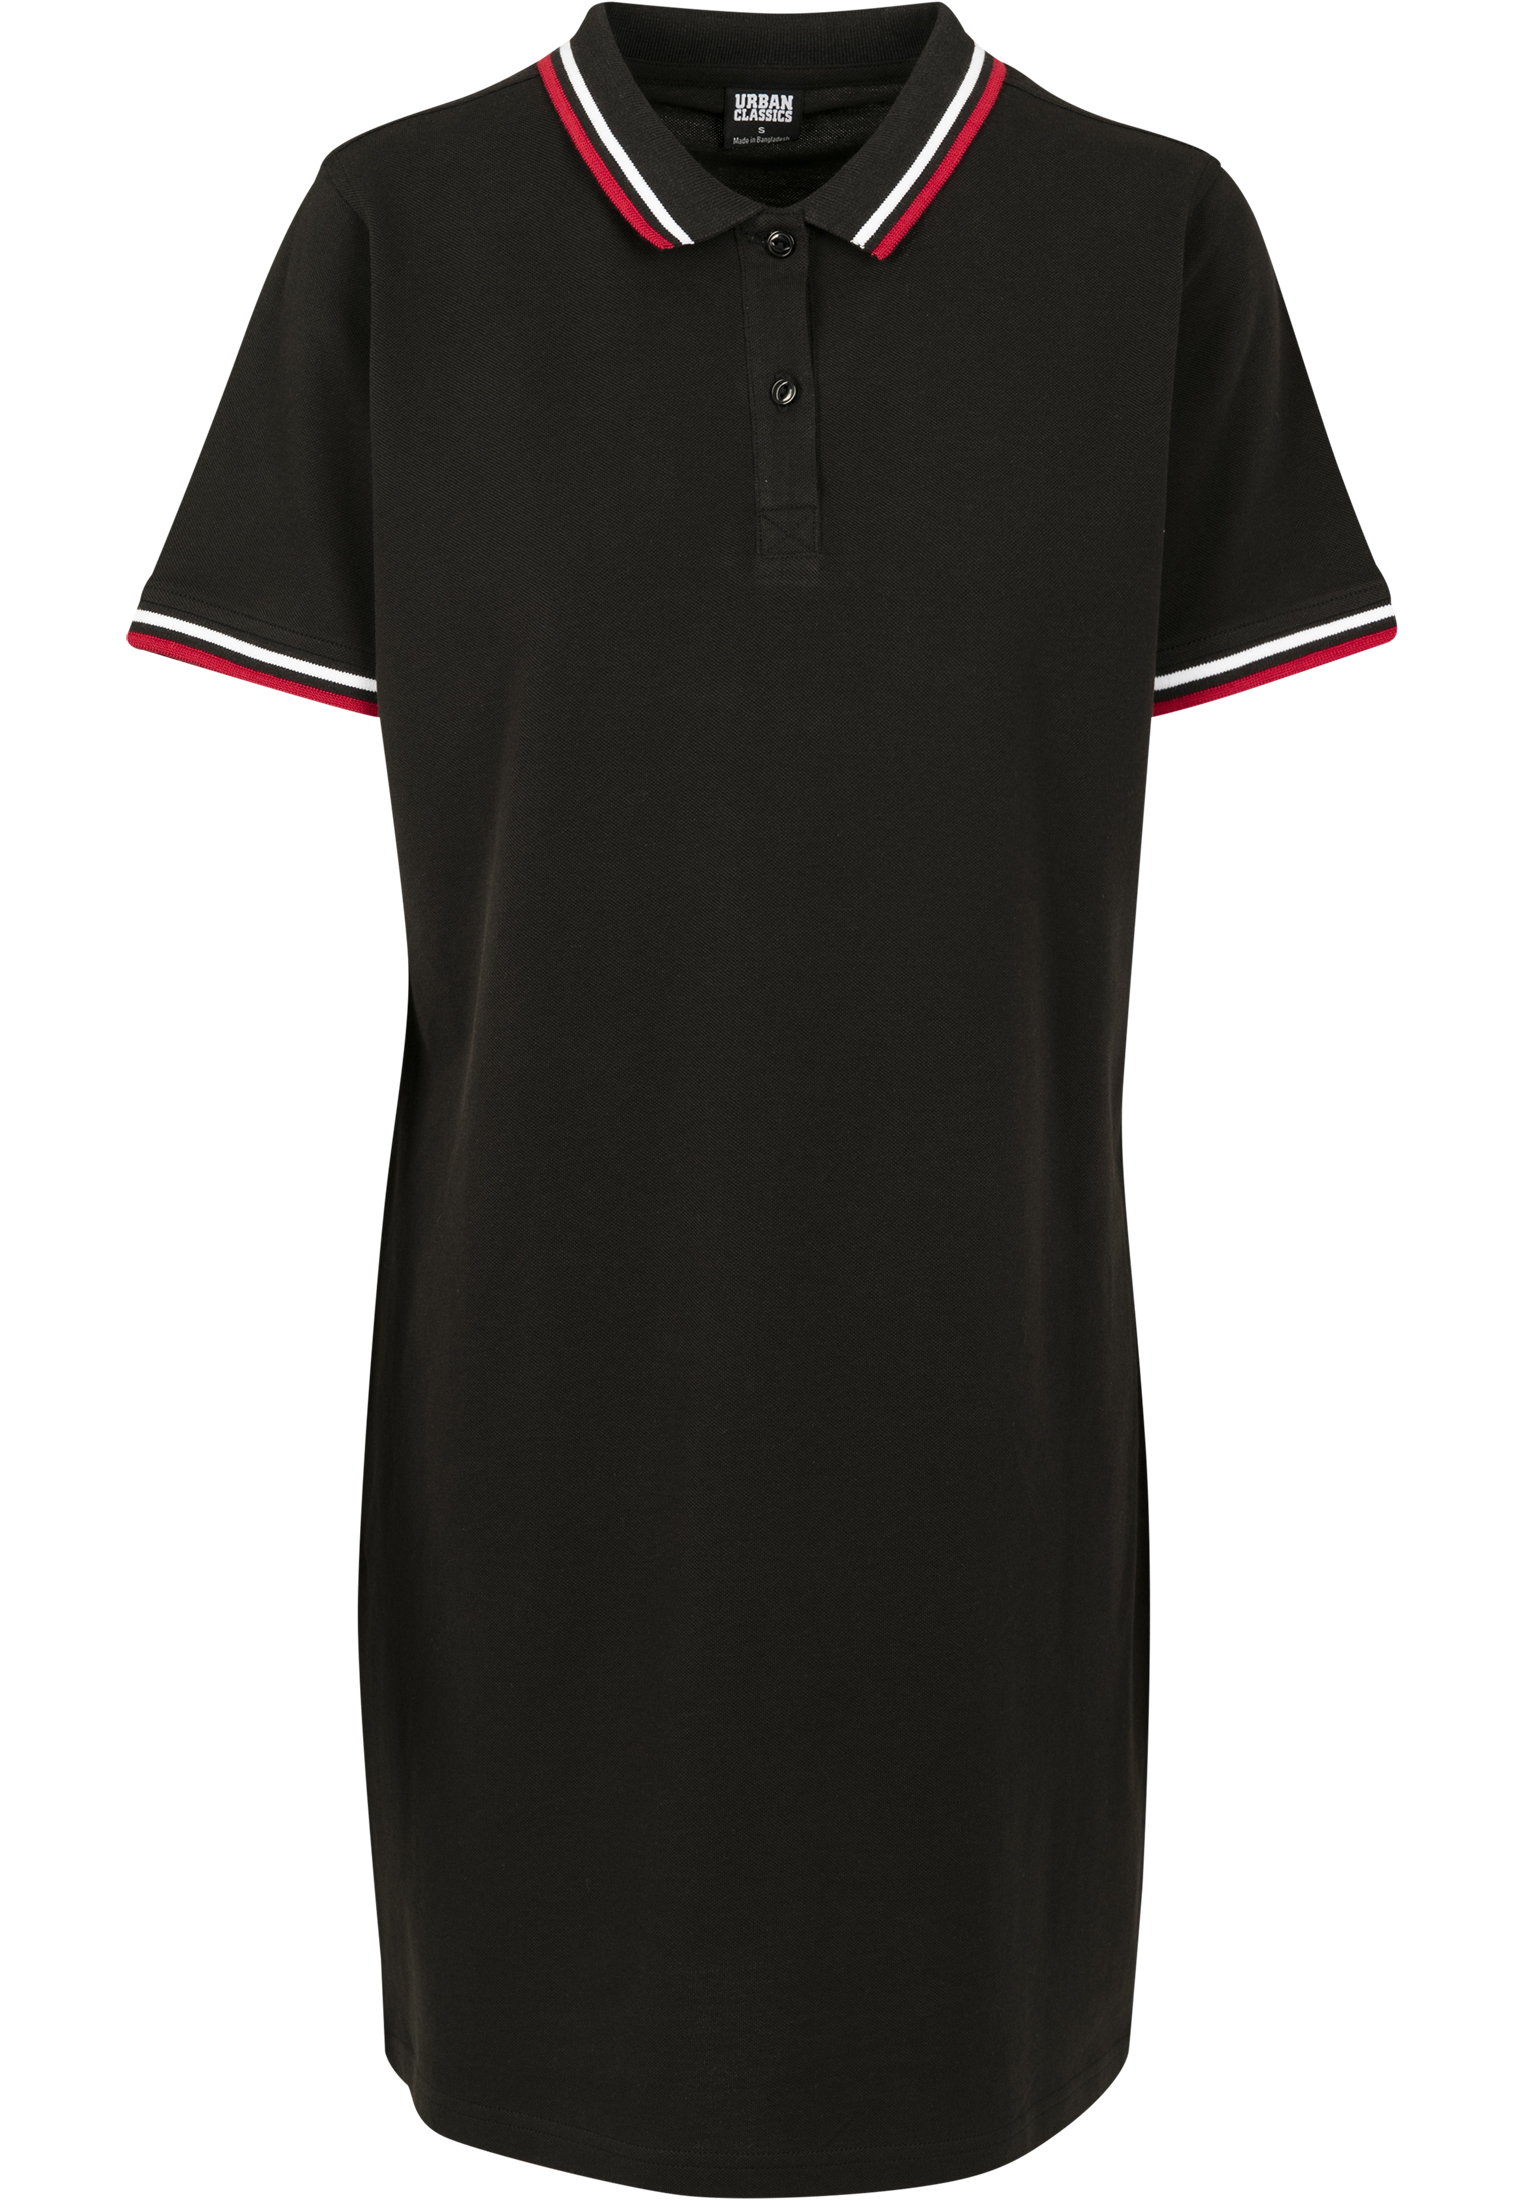 Kleider & R?cke Ladies Polo Dress in Farbe black